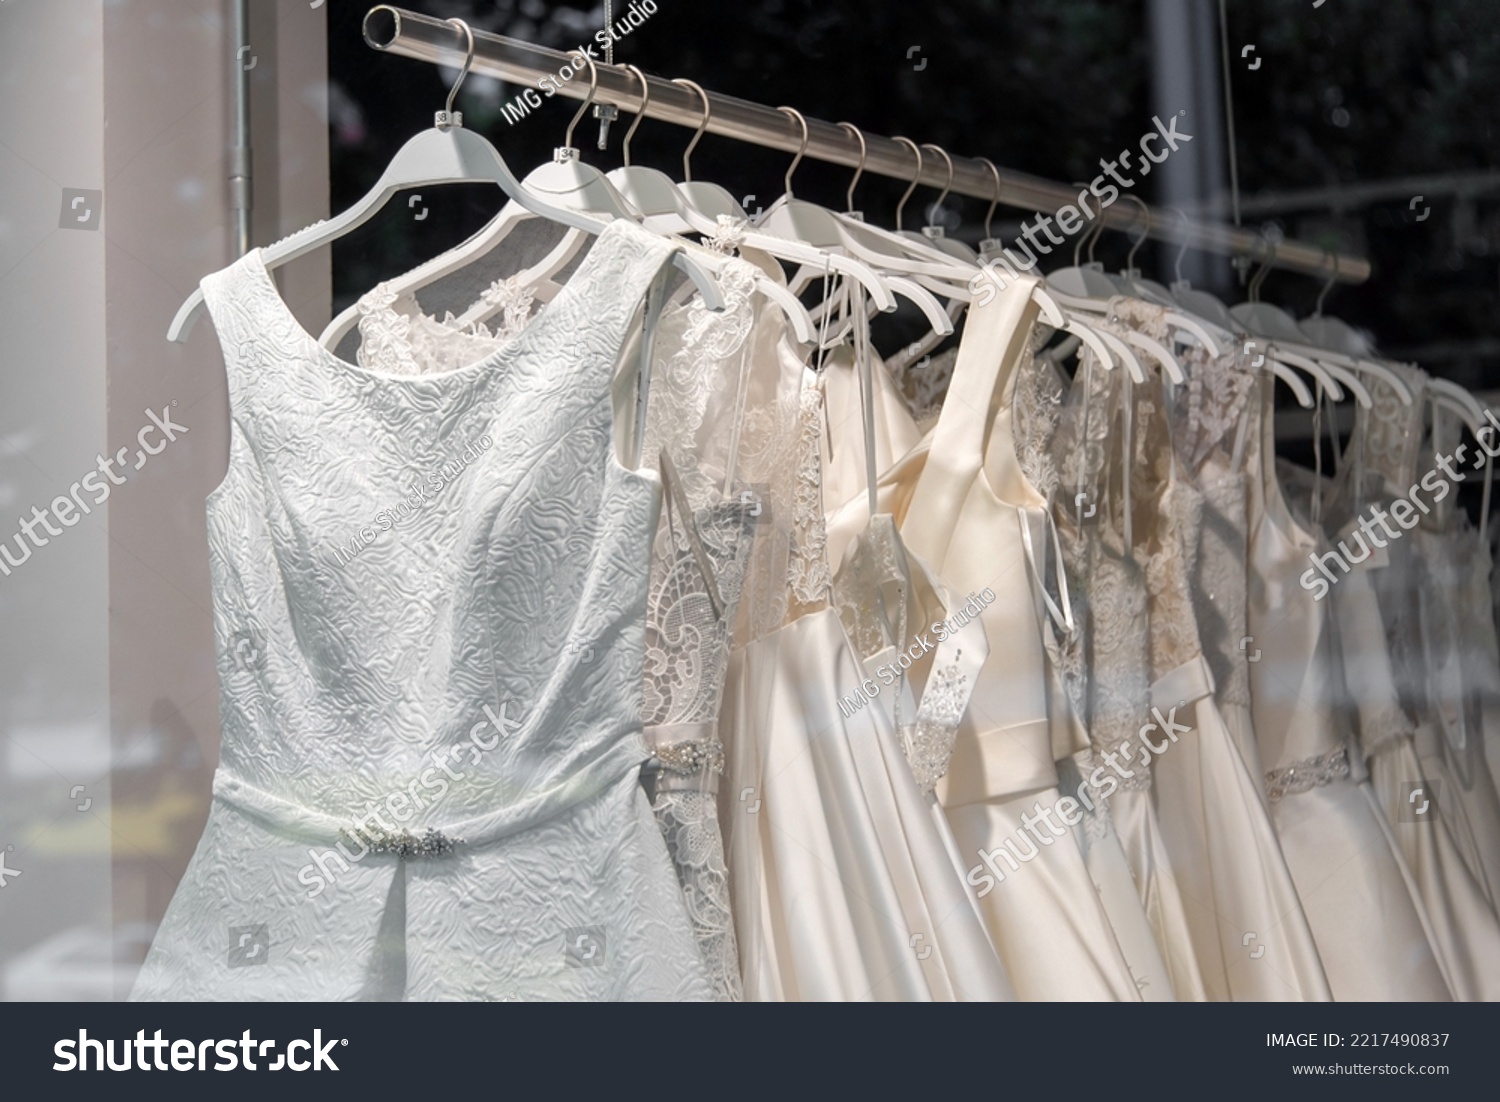 Beautiful bridal dress on hangers. Wedding dress close up at the wedding salon. Wedding dresses hanging on a hanger. Interior of bridal salon. #2217490837